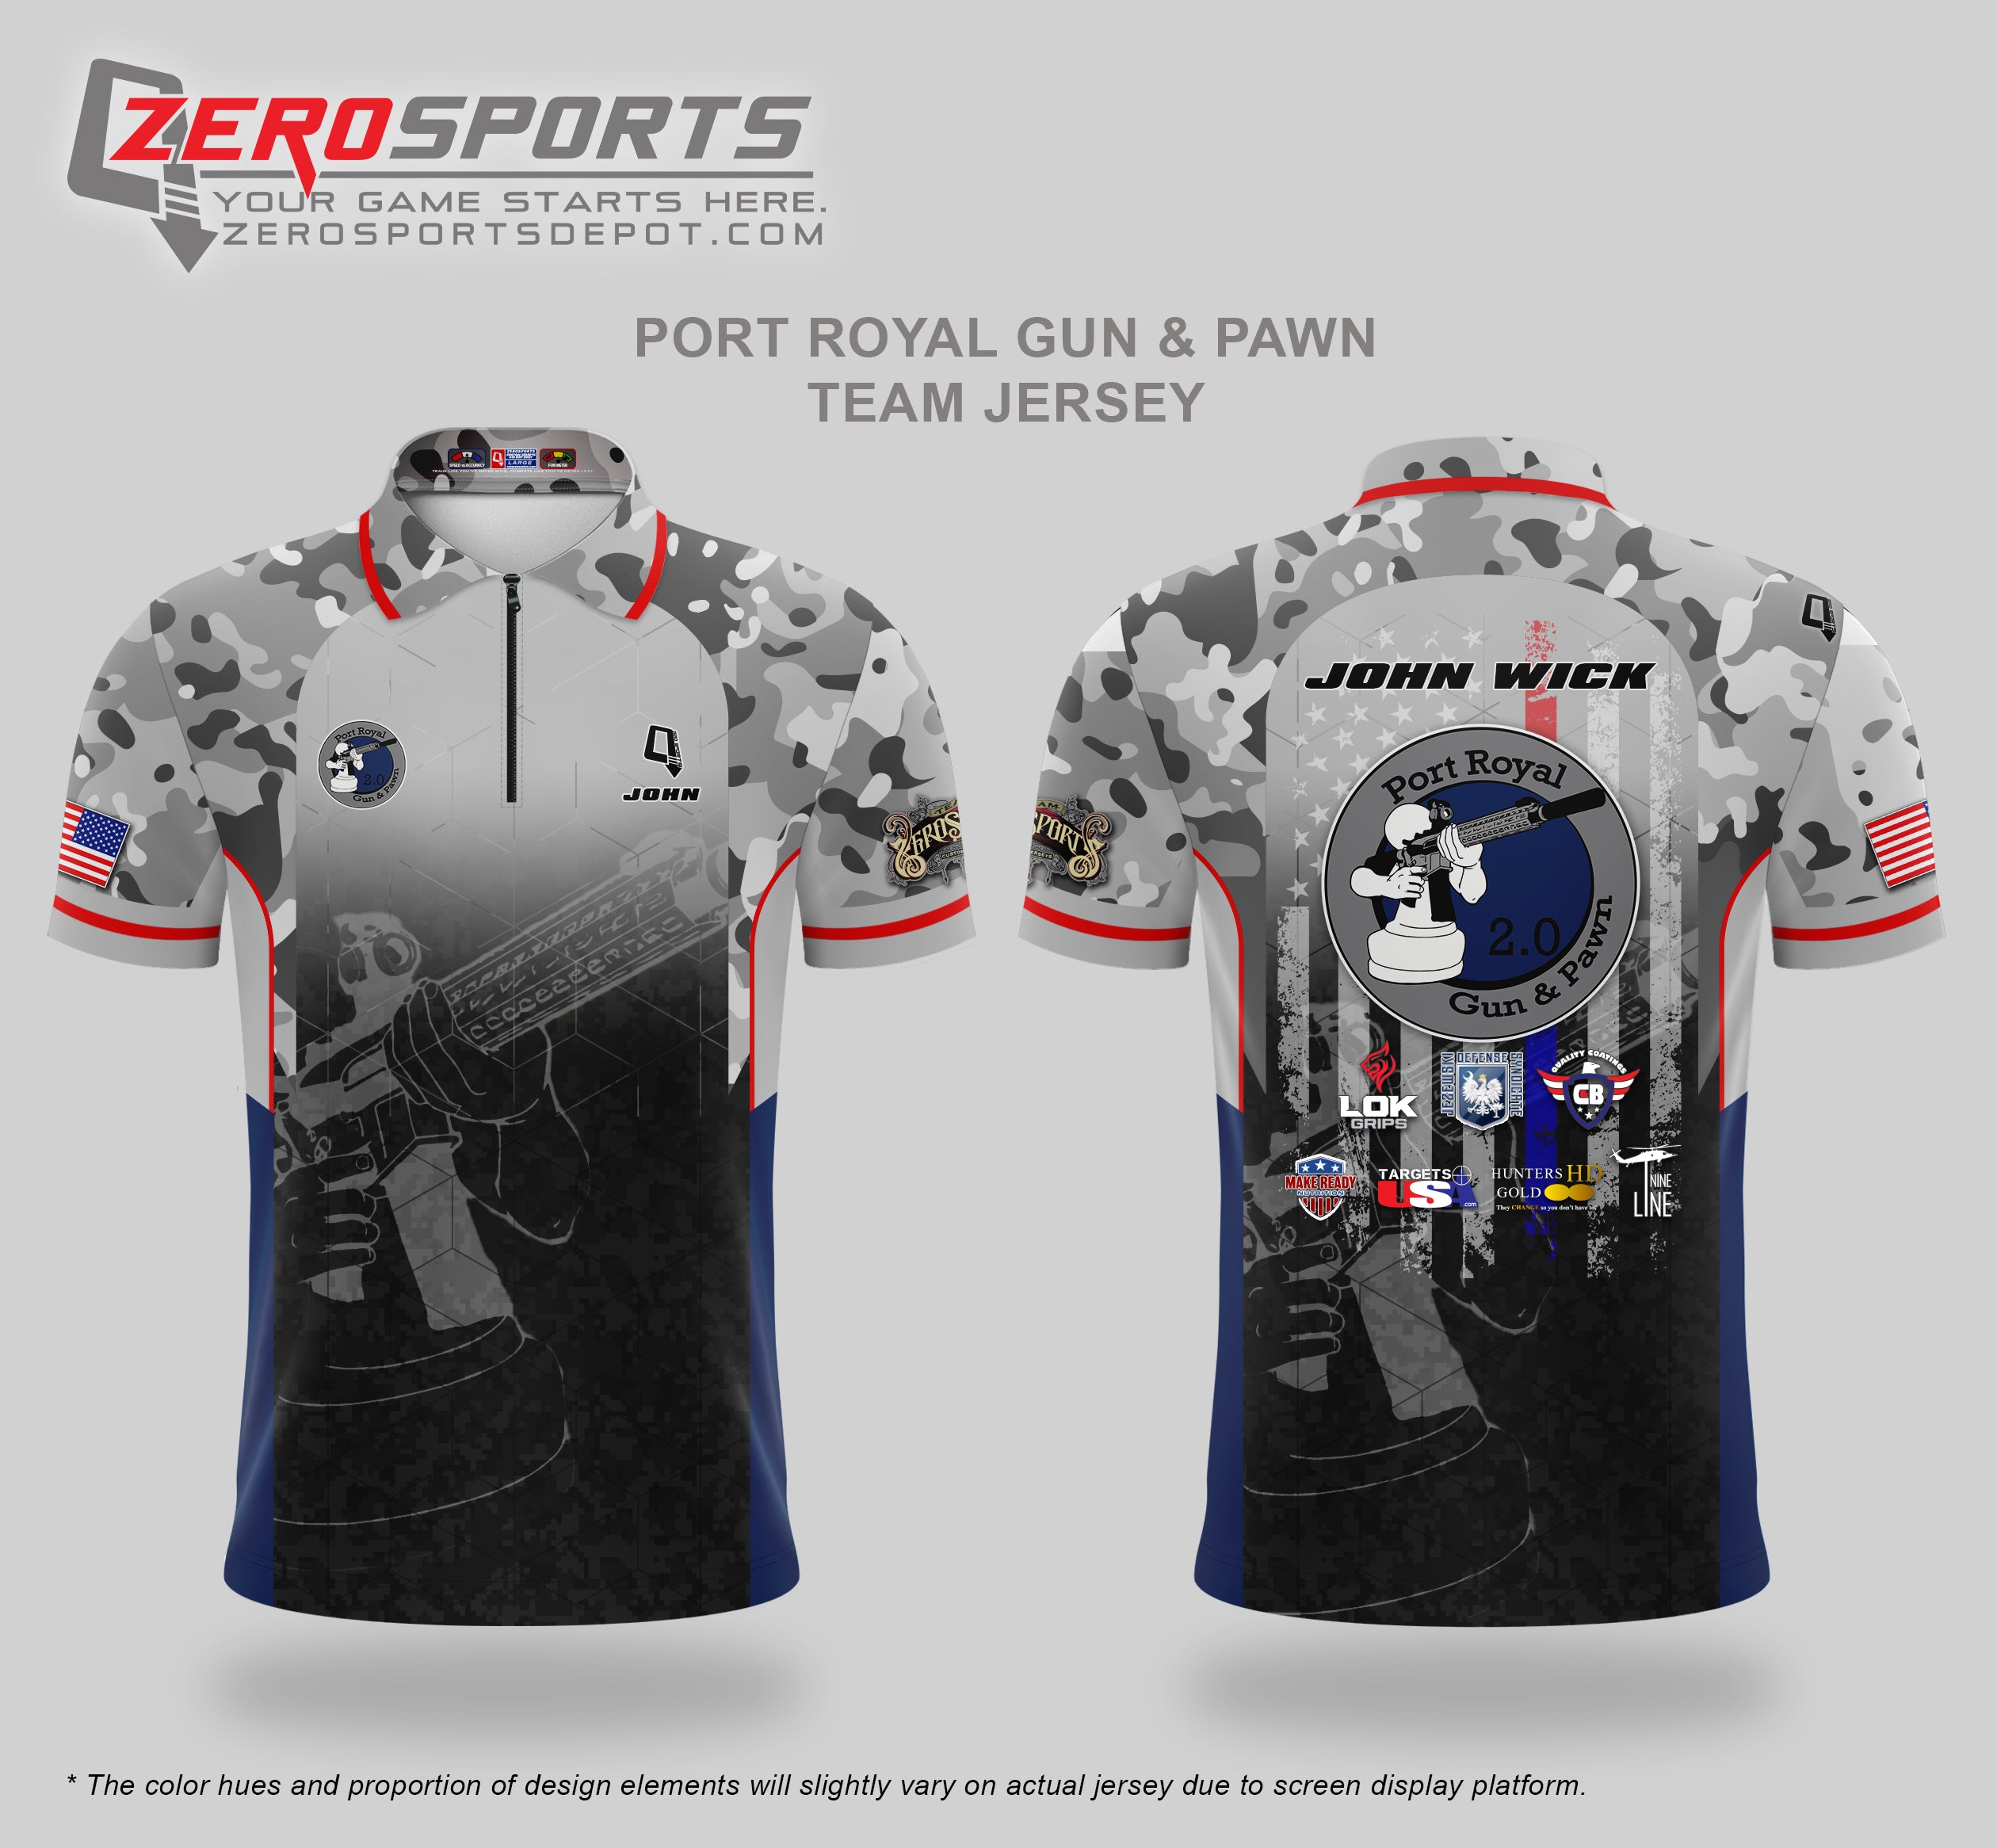 Port Royal Gun & Pawn Team Jersey